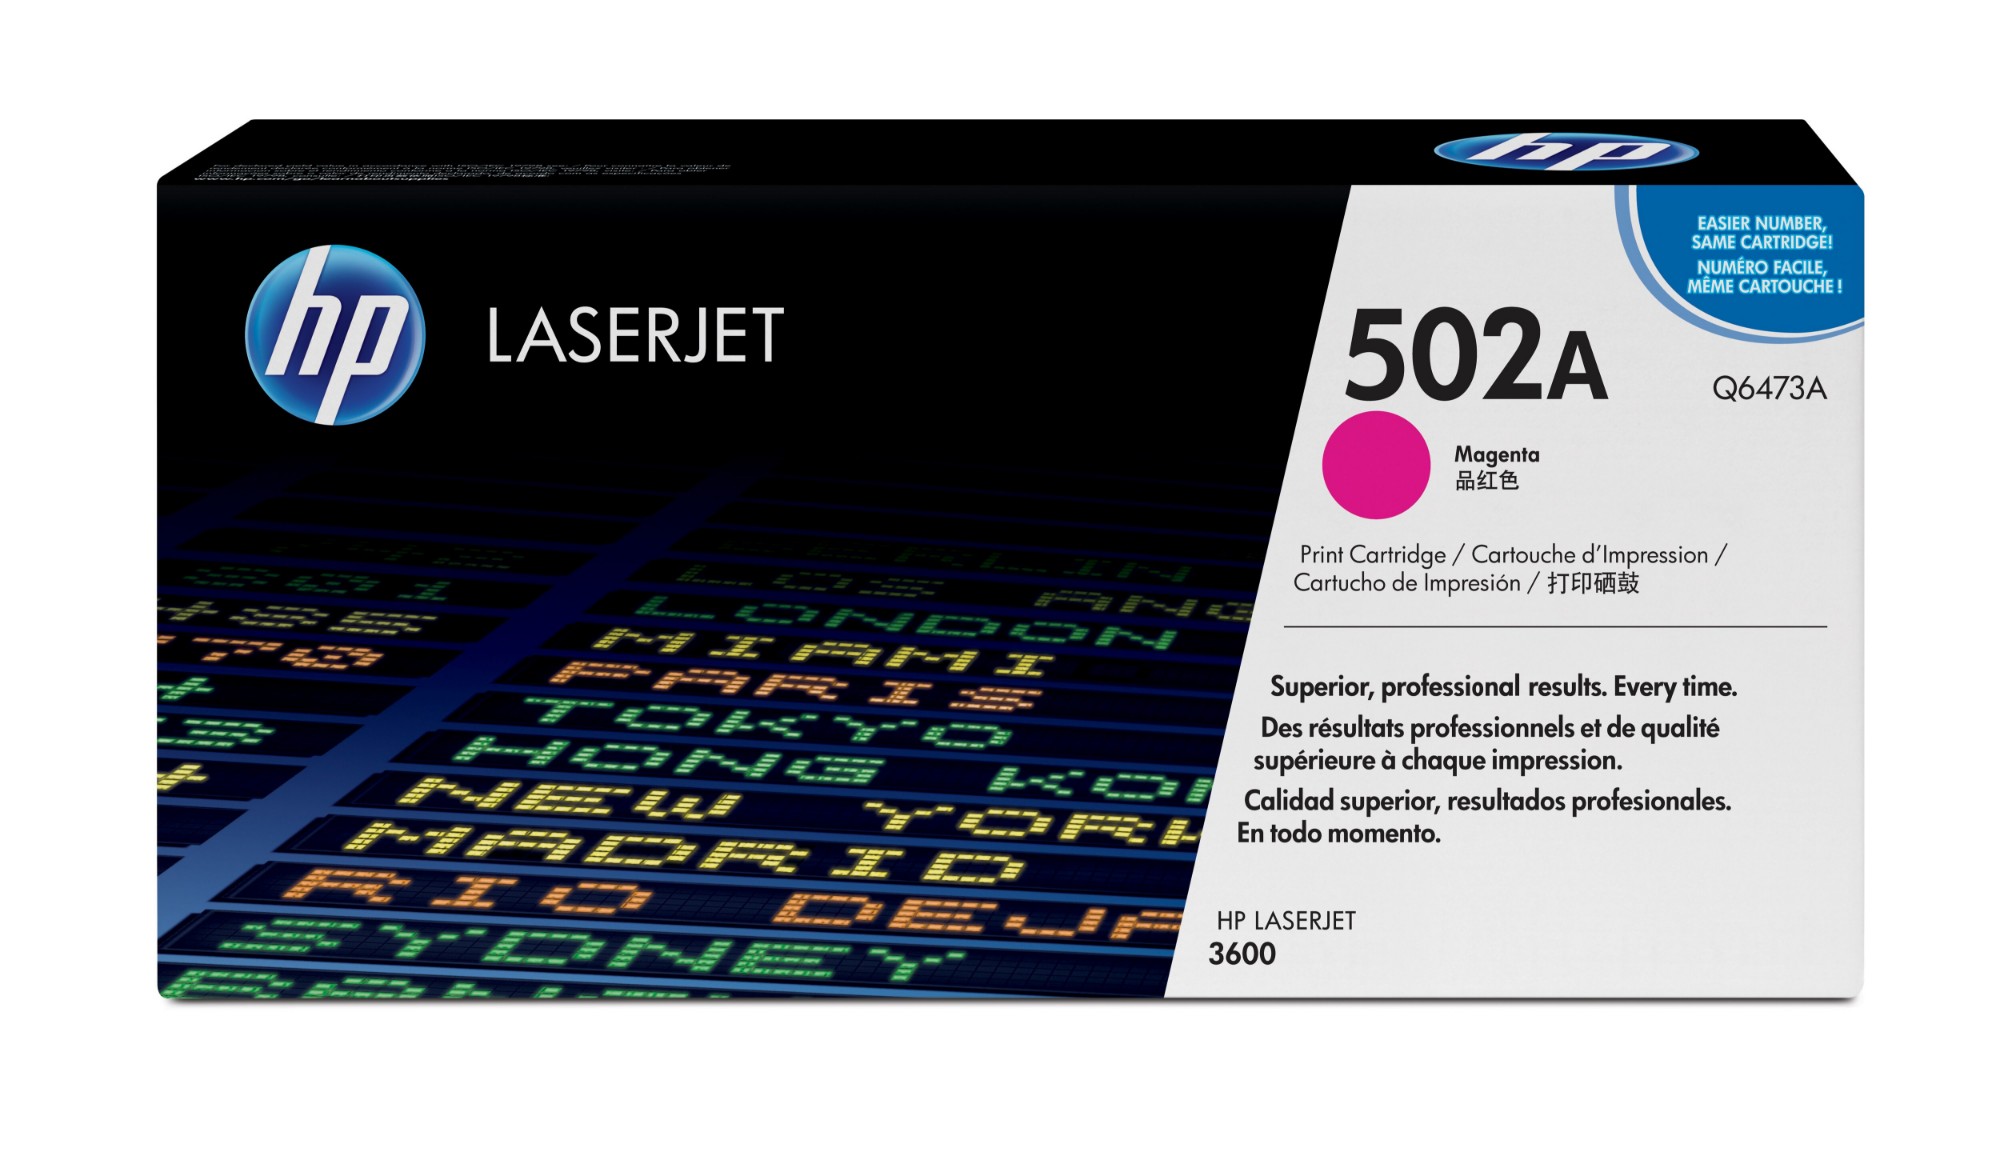 HP Q6473A/502A Toner cartridge magenta, 4K pages/5% for HP Color LaserJet 3600